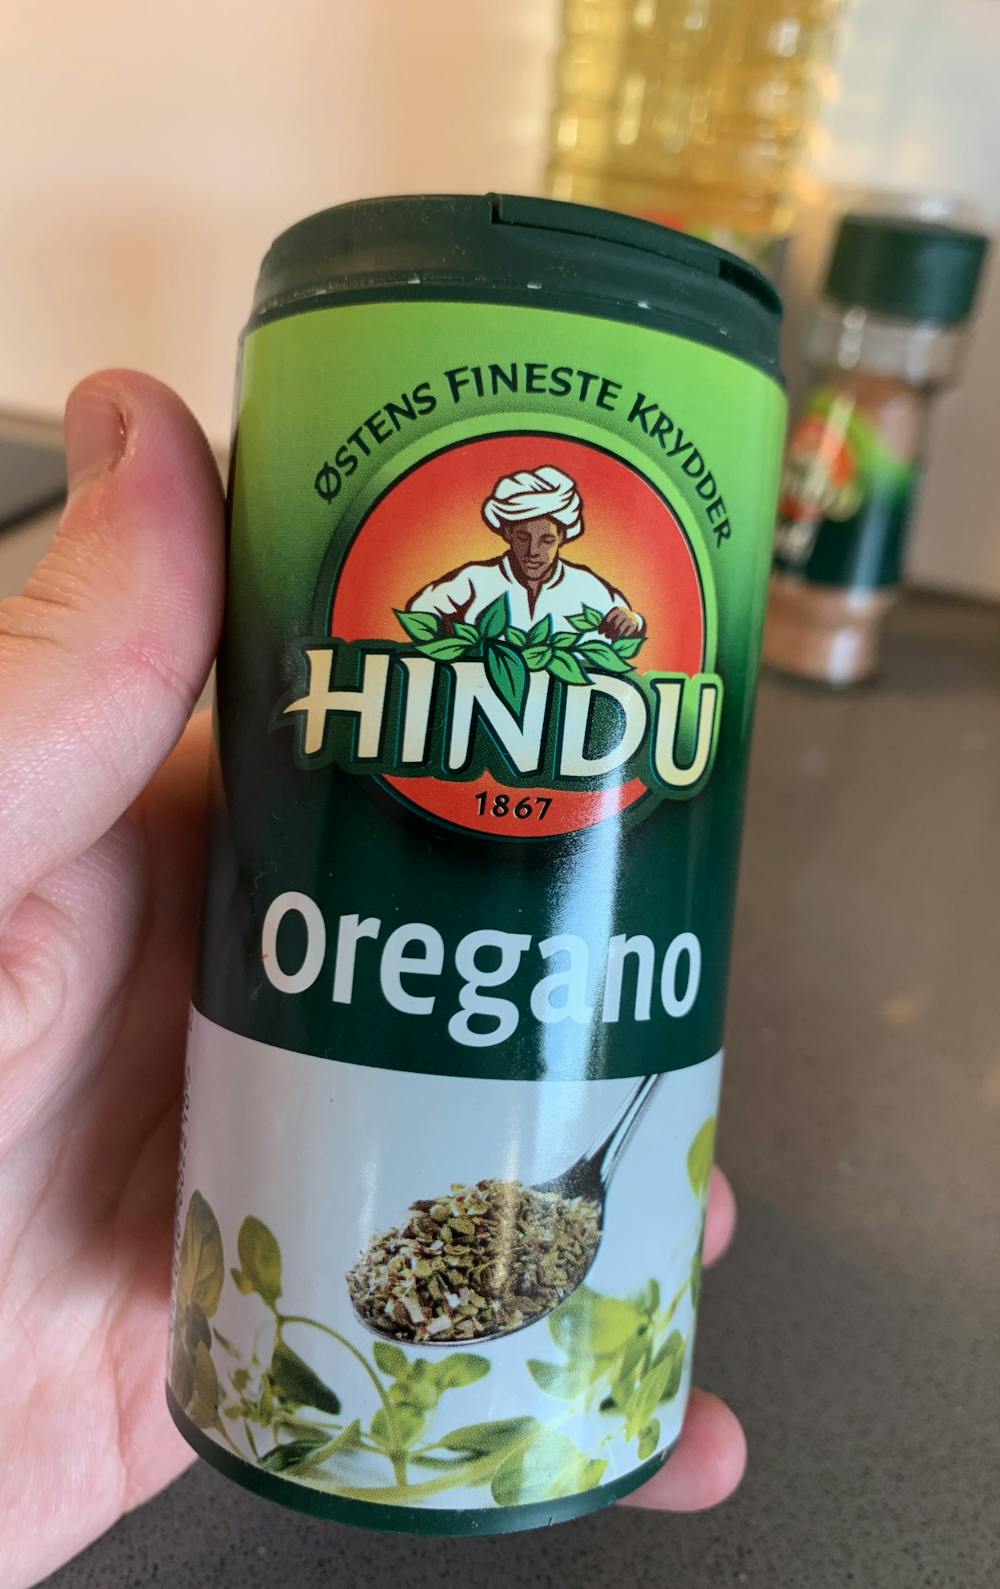 Oregano, Hindu